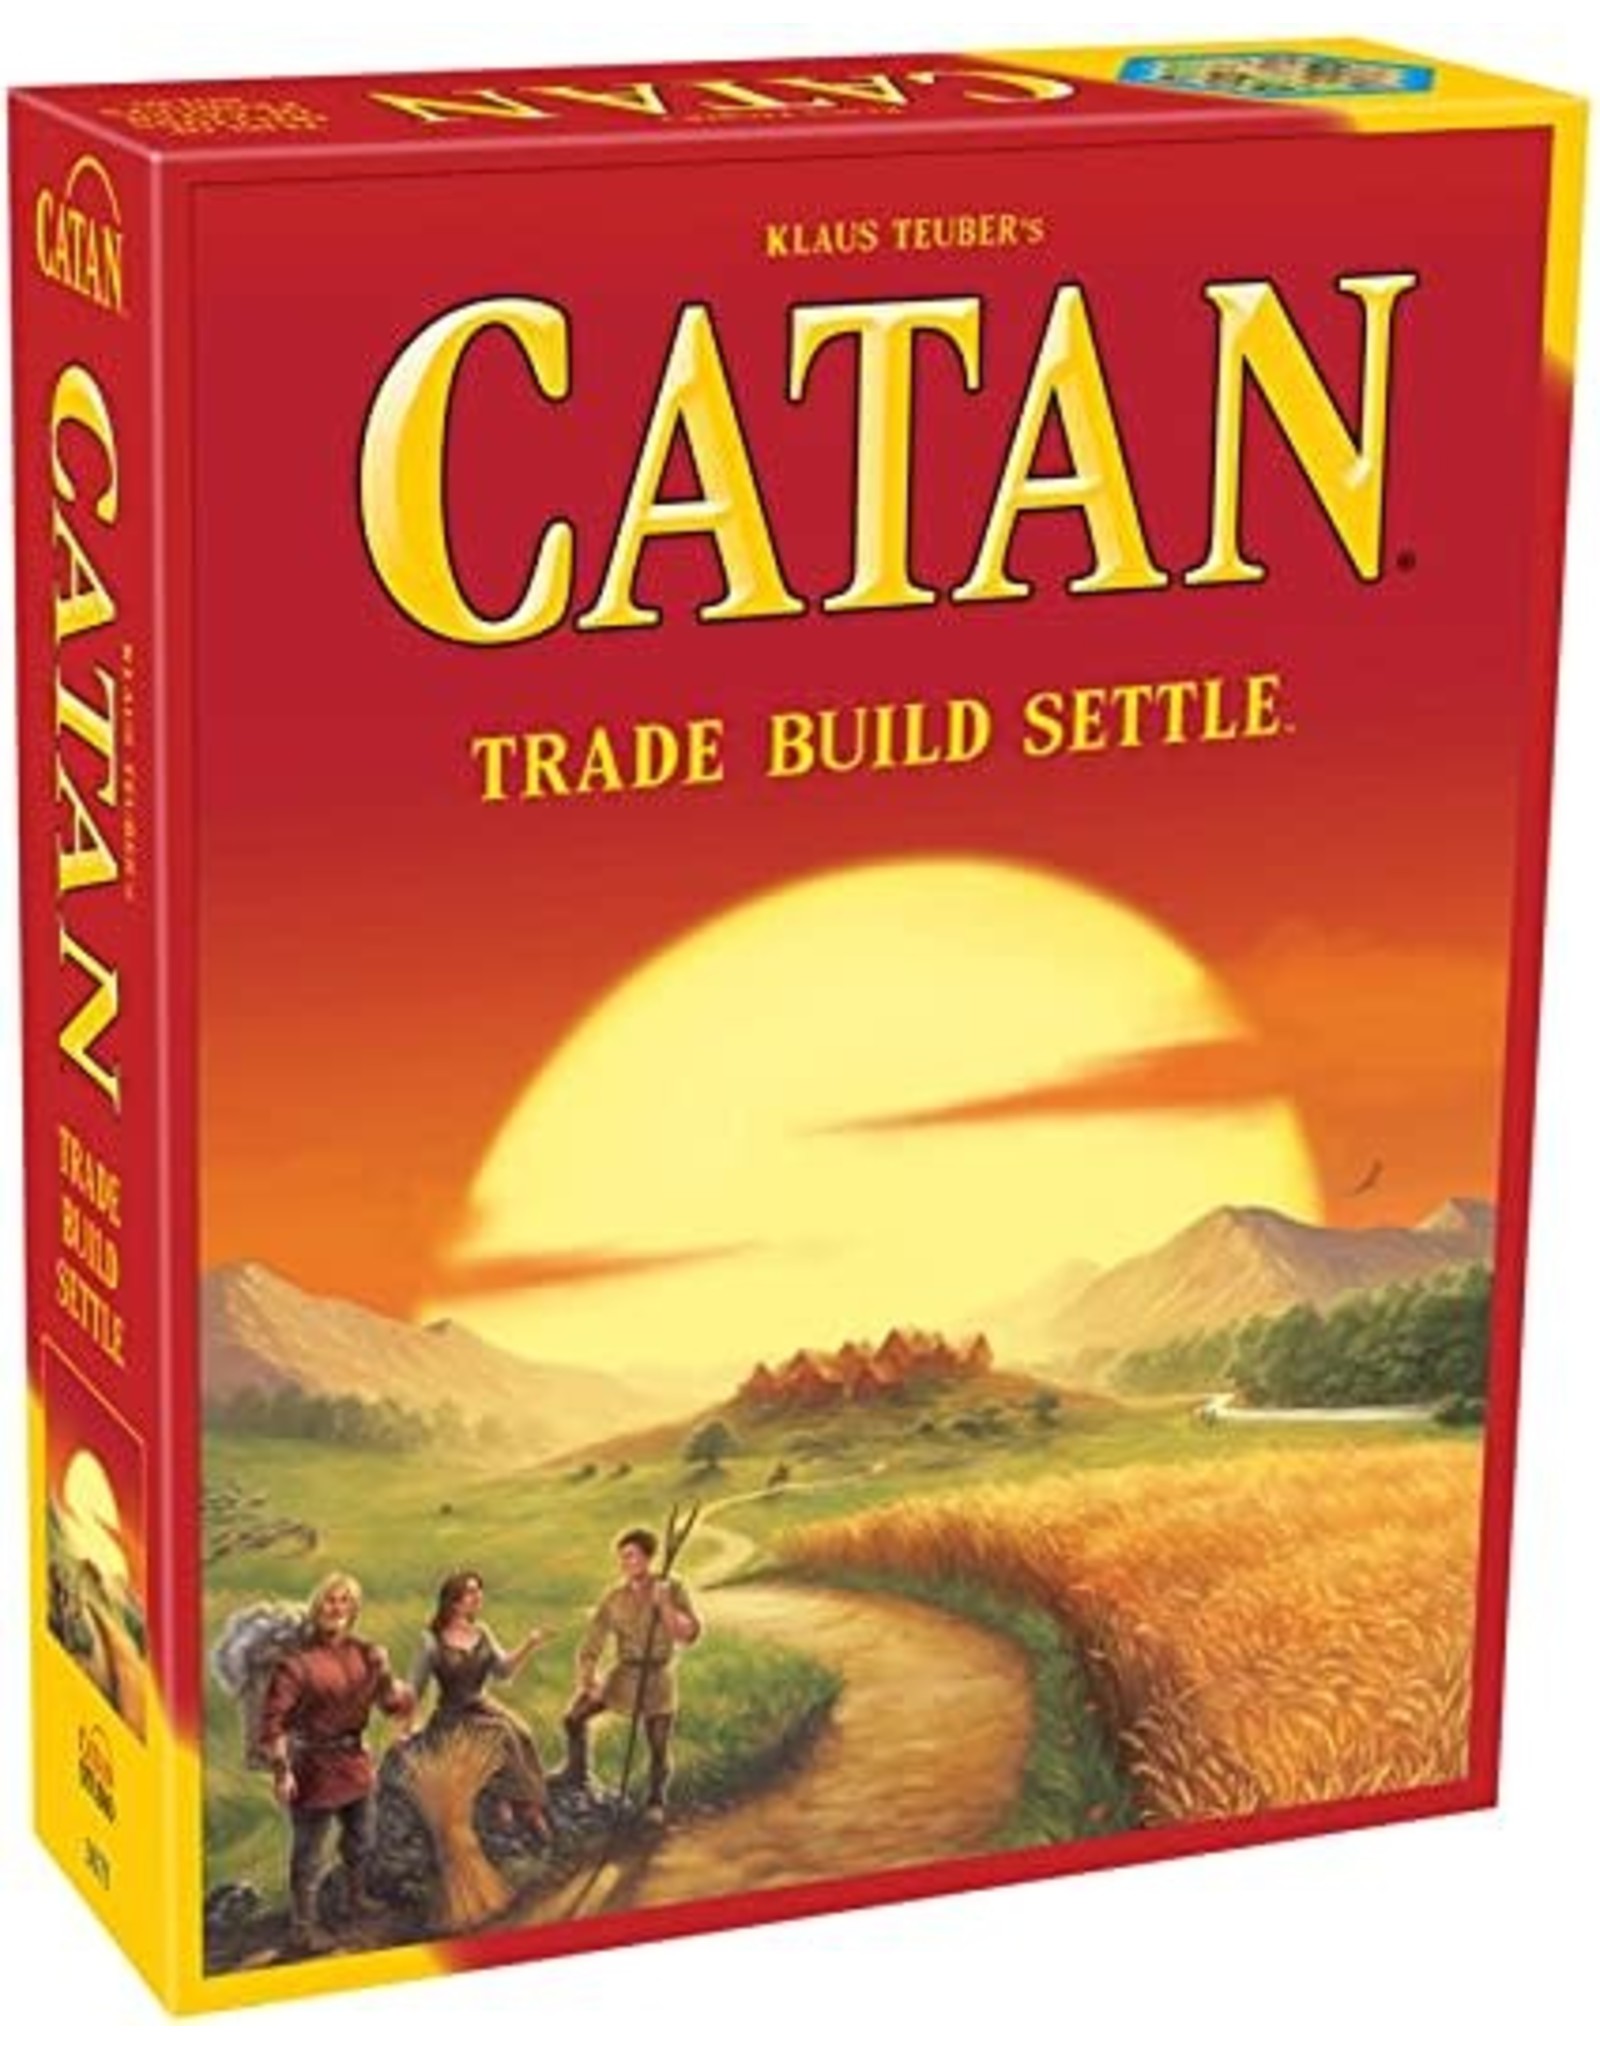 Mayfair Catan: Base Game